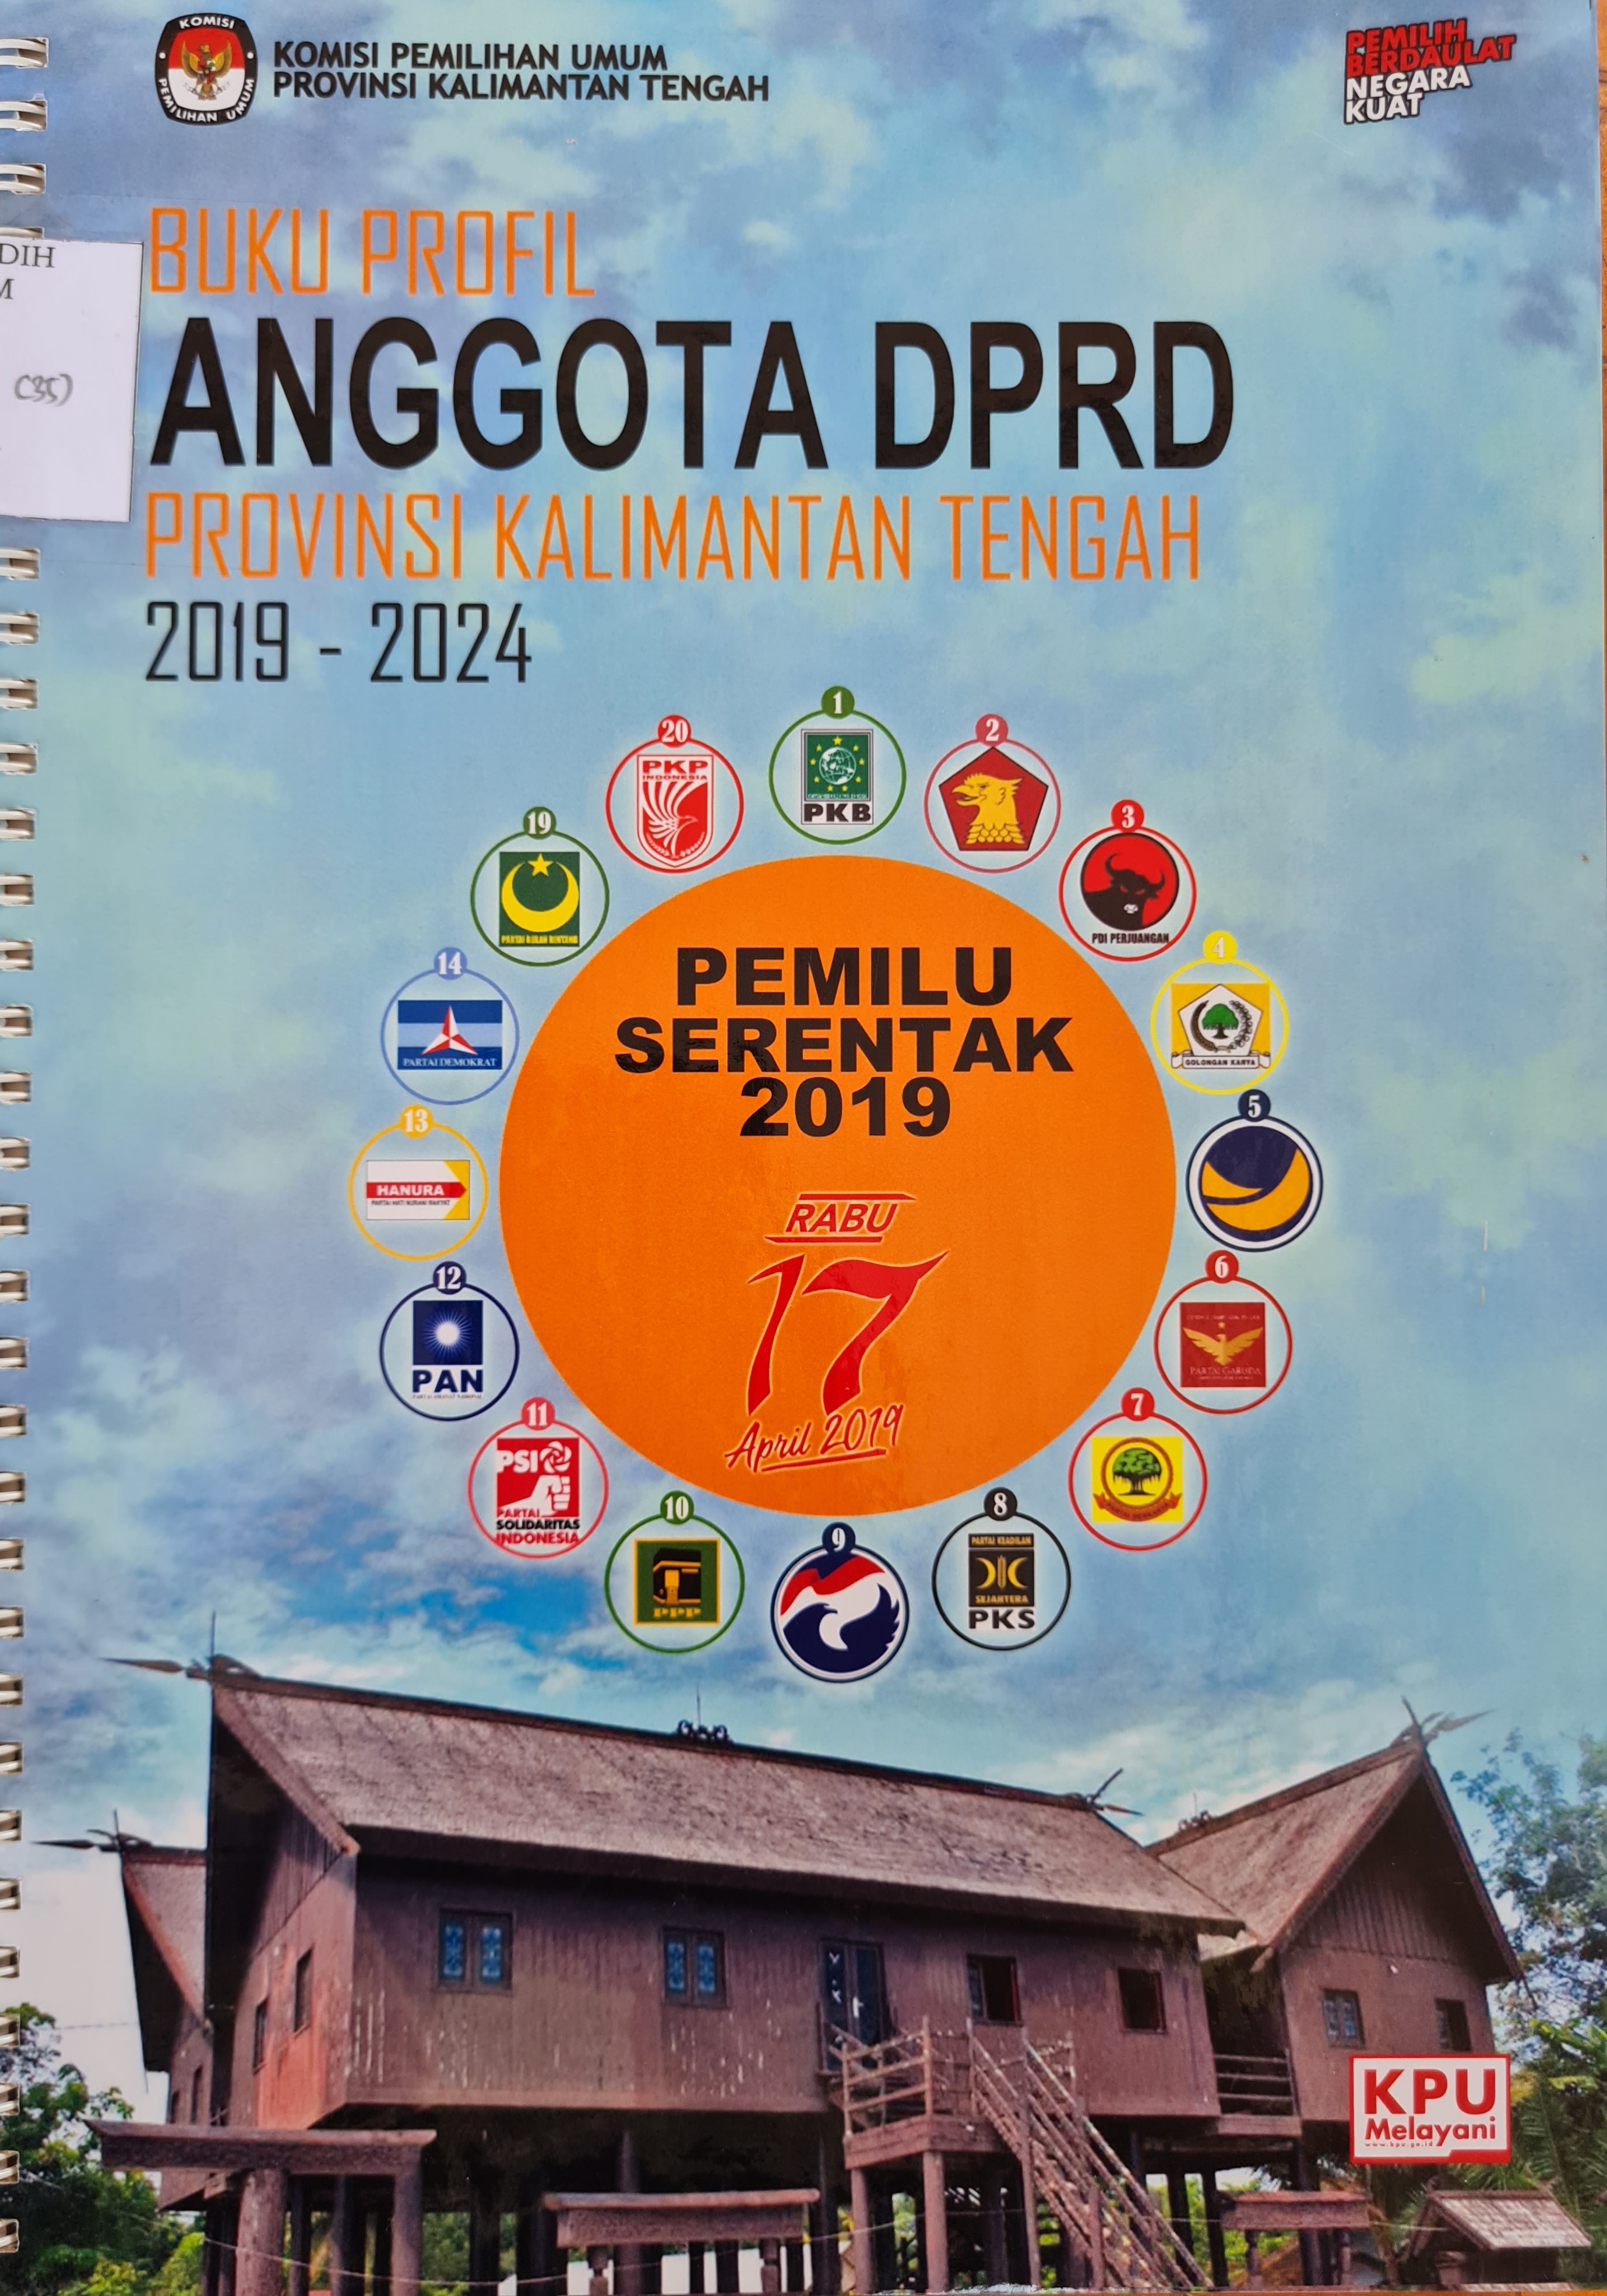 Buku Profil Anggota DPRD Provinsi Kalimantan Tengah 2019-2024